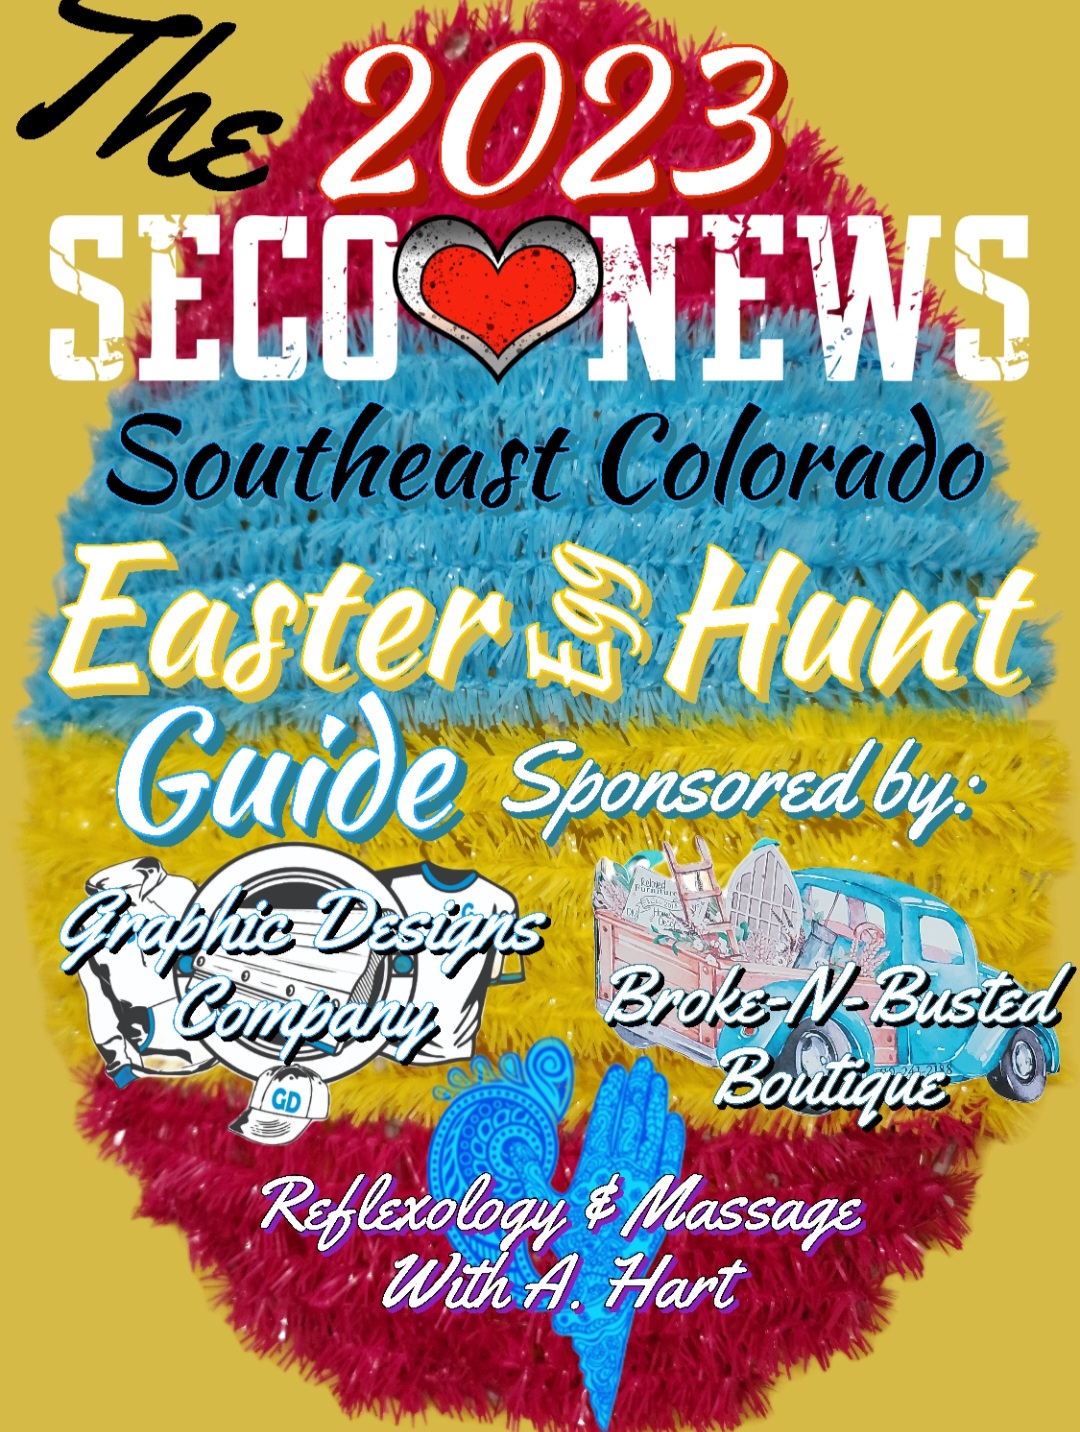 SECO NEWS - 2023 Southeast Colorado Easter Egg Hunt Guide & Map